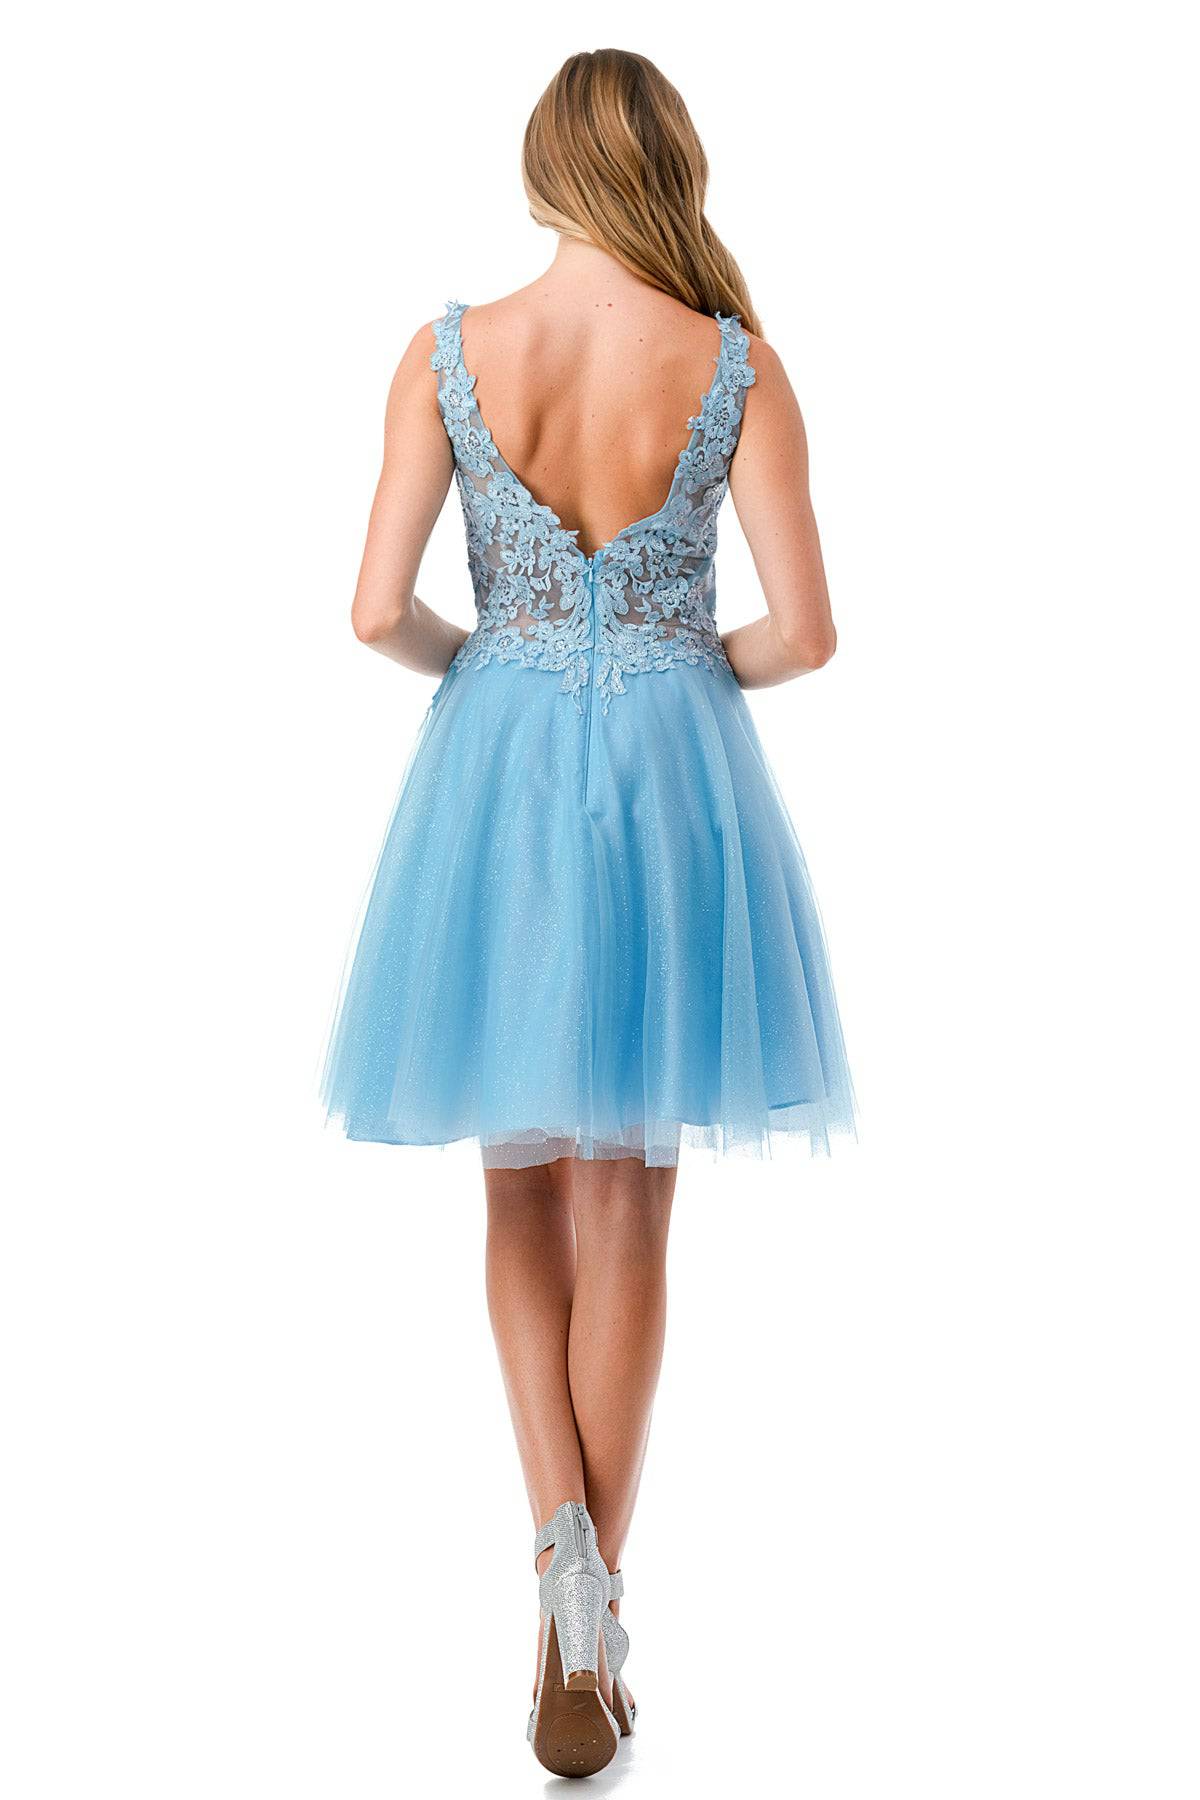 Aspeed S2739J Floral Sky Blue Short Dress - NORMA REED